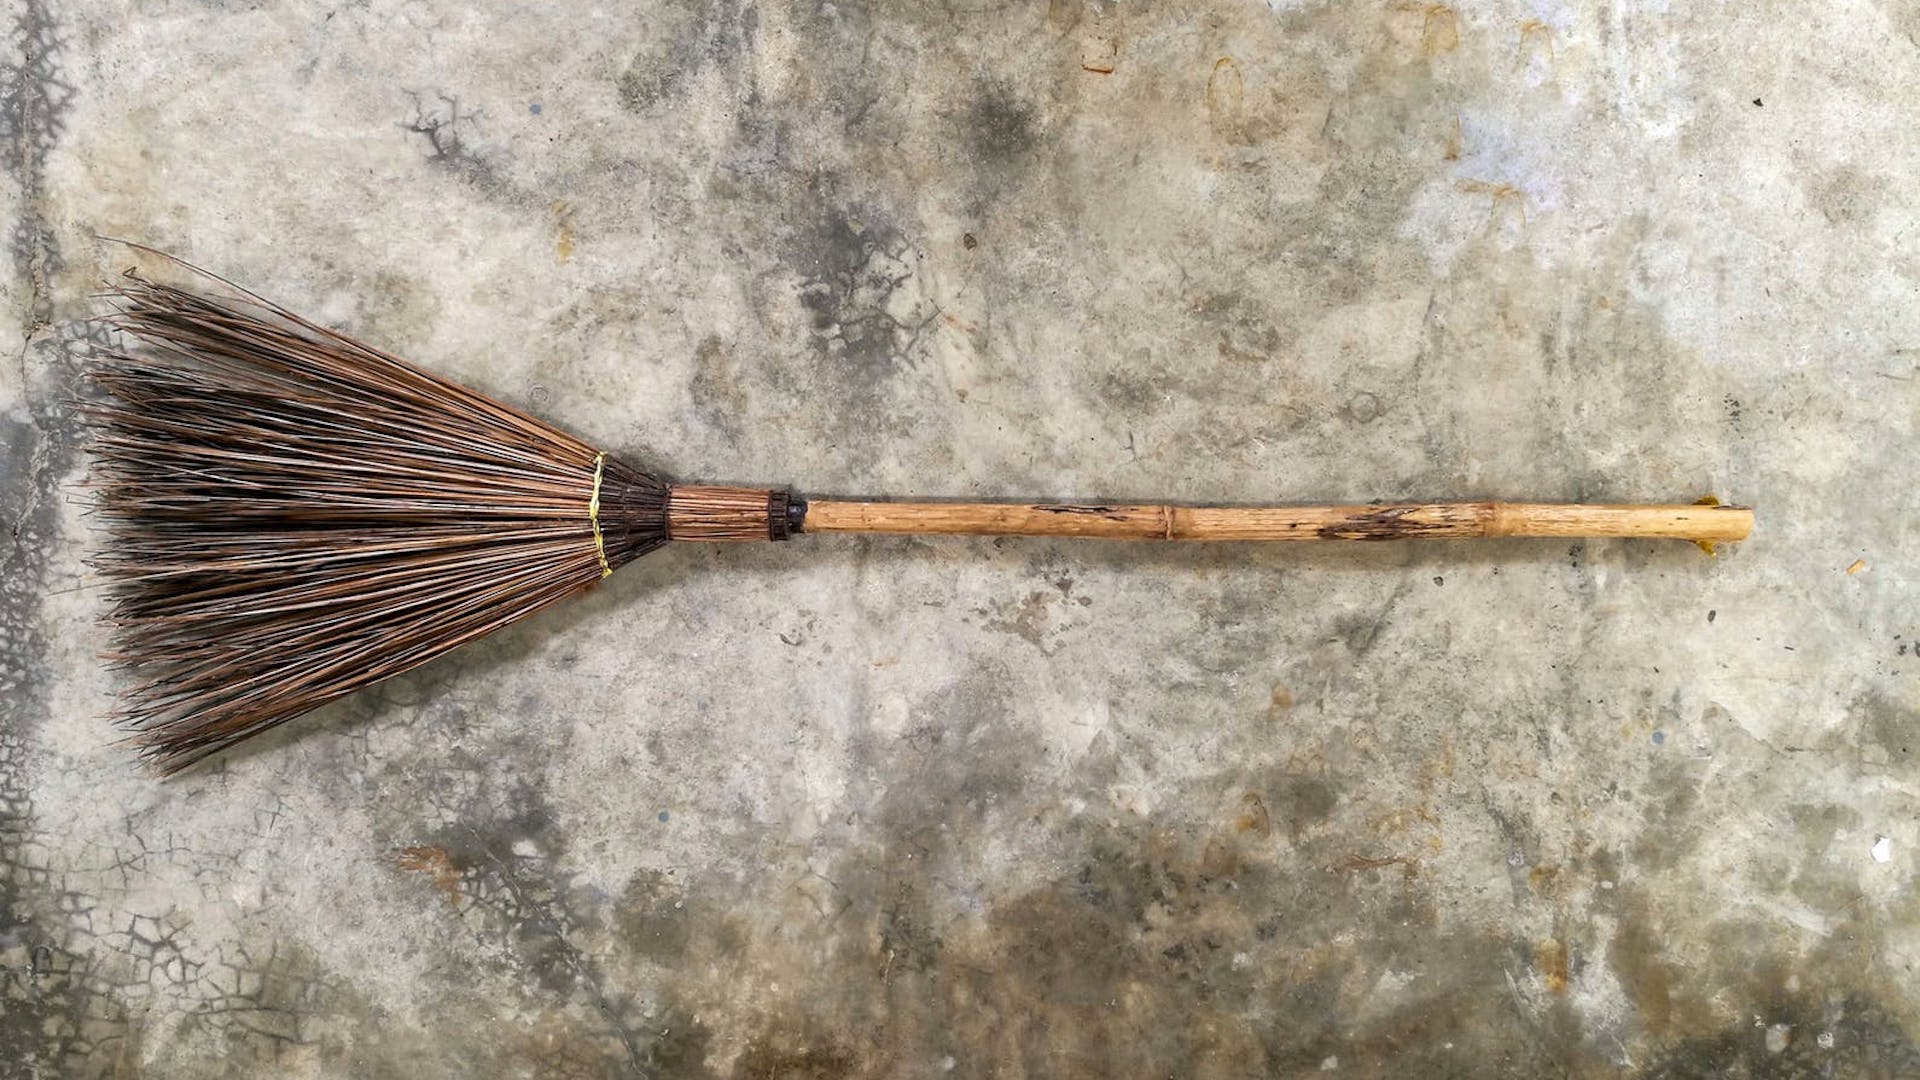 A broomstick